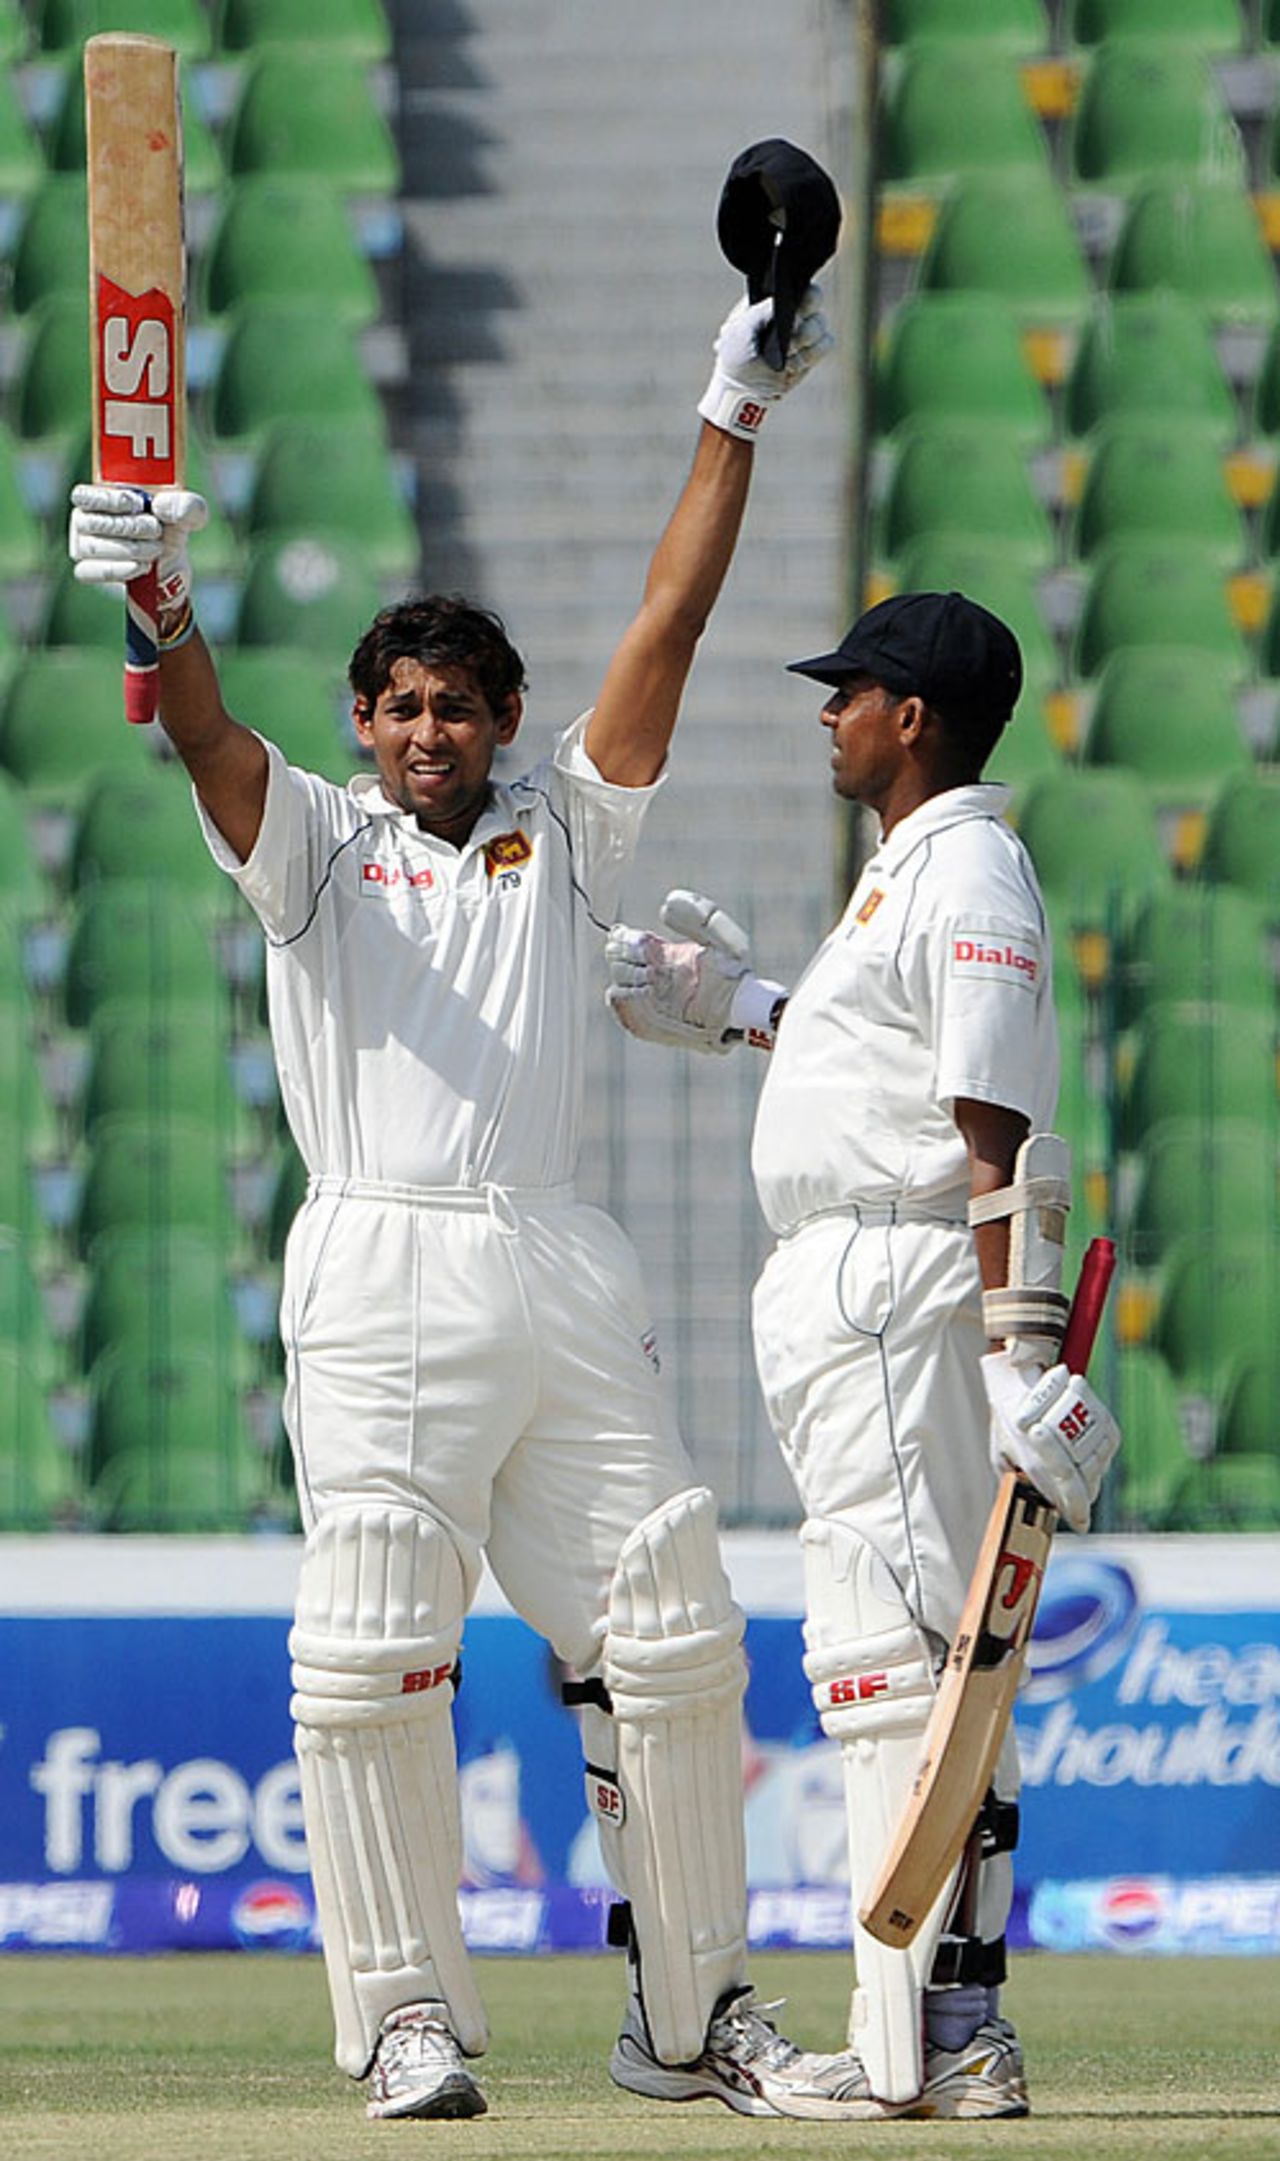 Tillakaratne Dilshan scored his century off 109 balls, Pakistan v Sri Lanka, 2nd Test, 2nd day, March 2, 2009